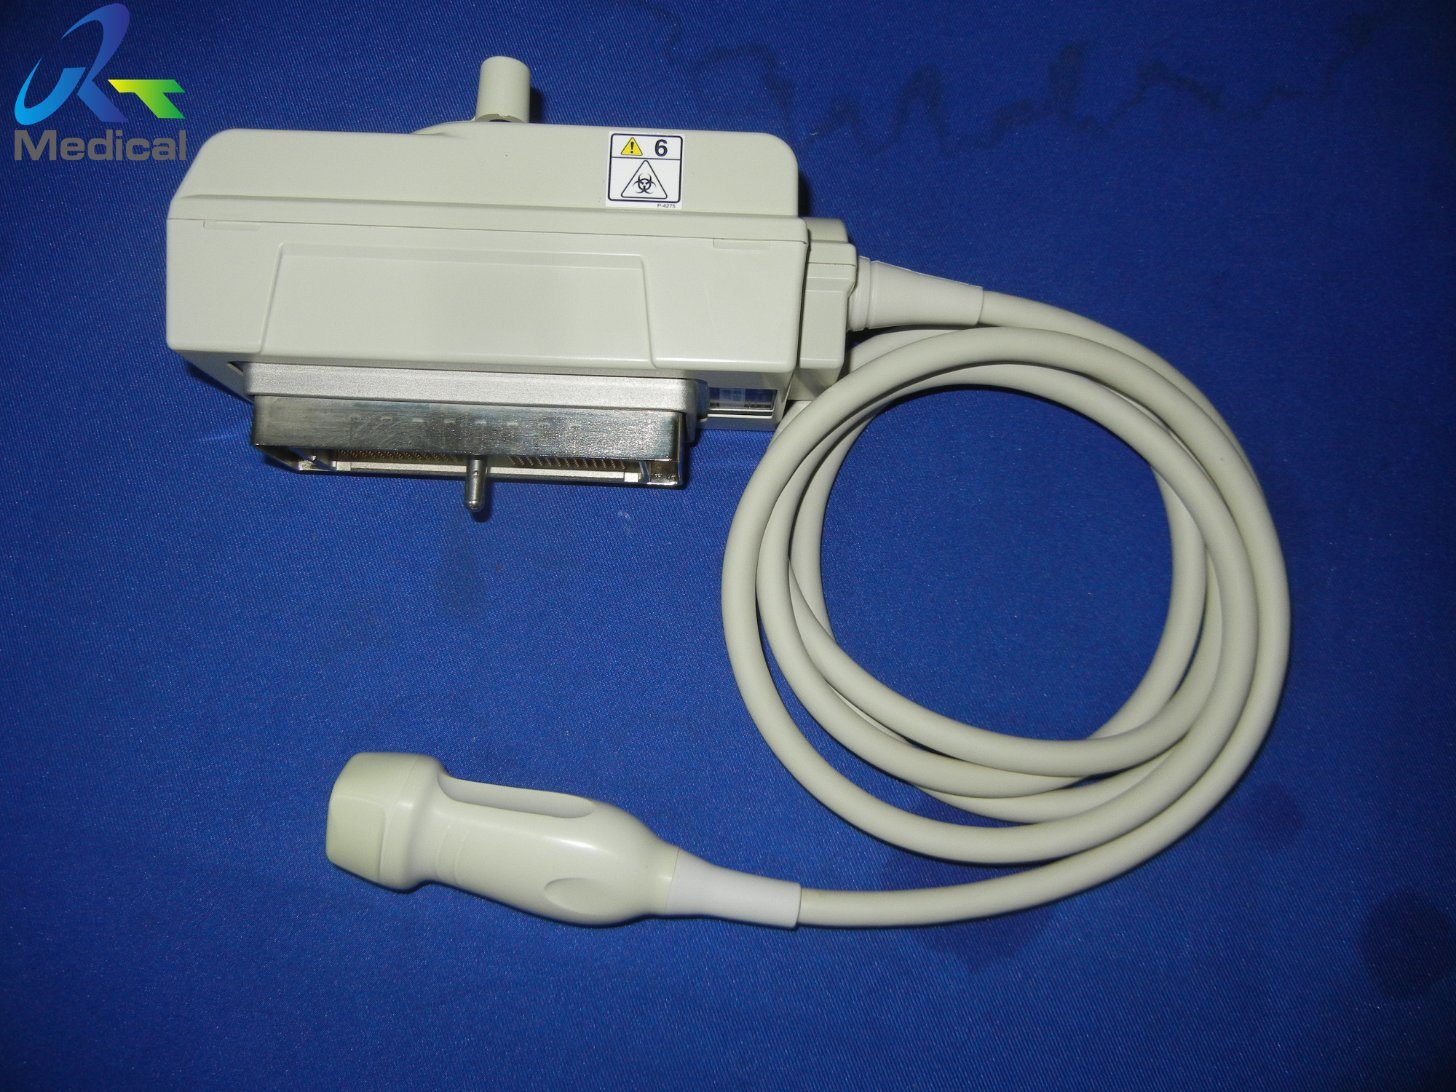  Aloka UST-52101 Phased Array Cardiac Transducer